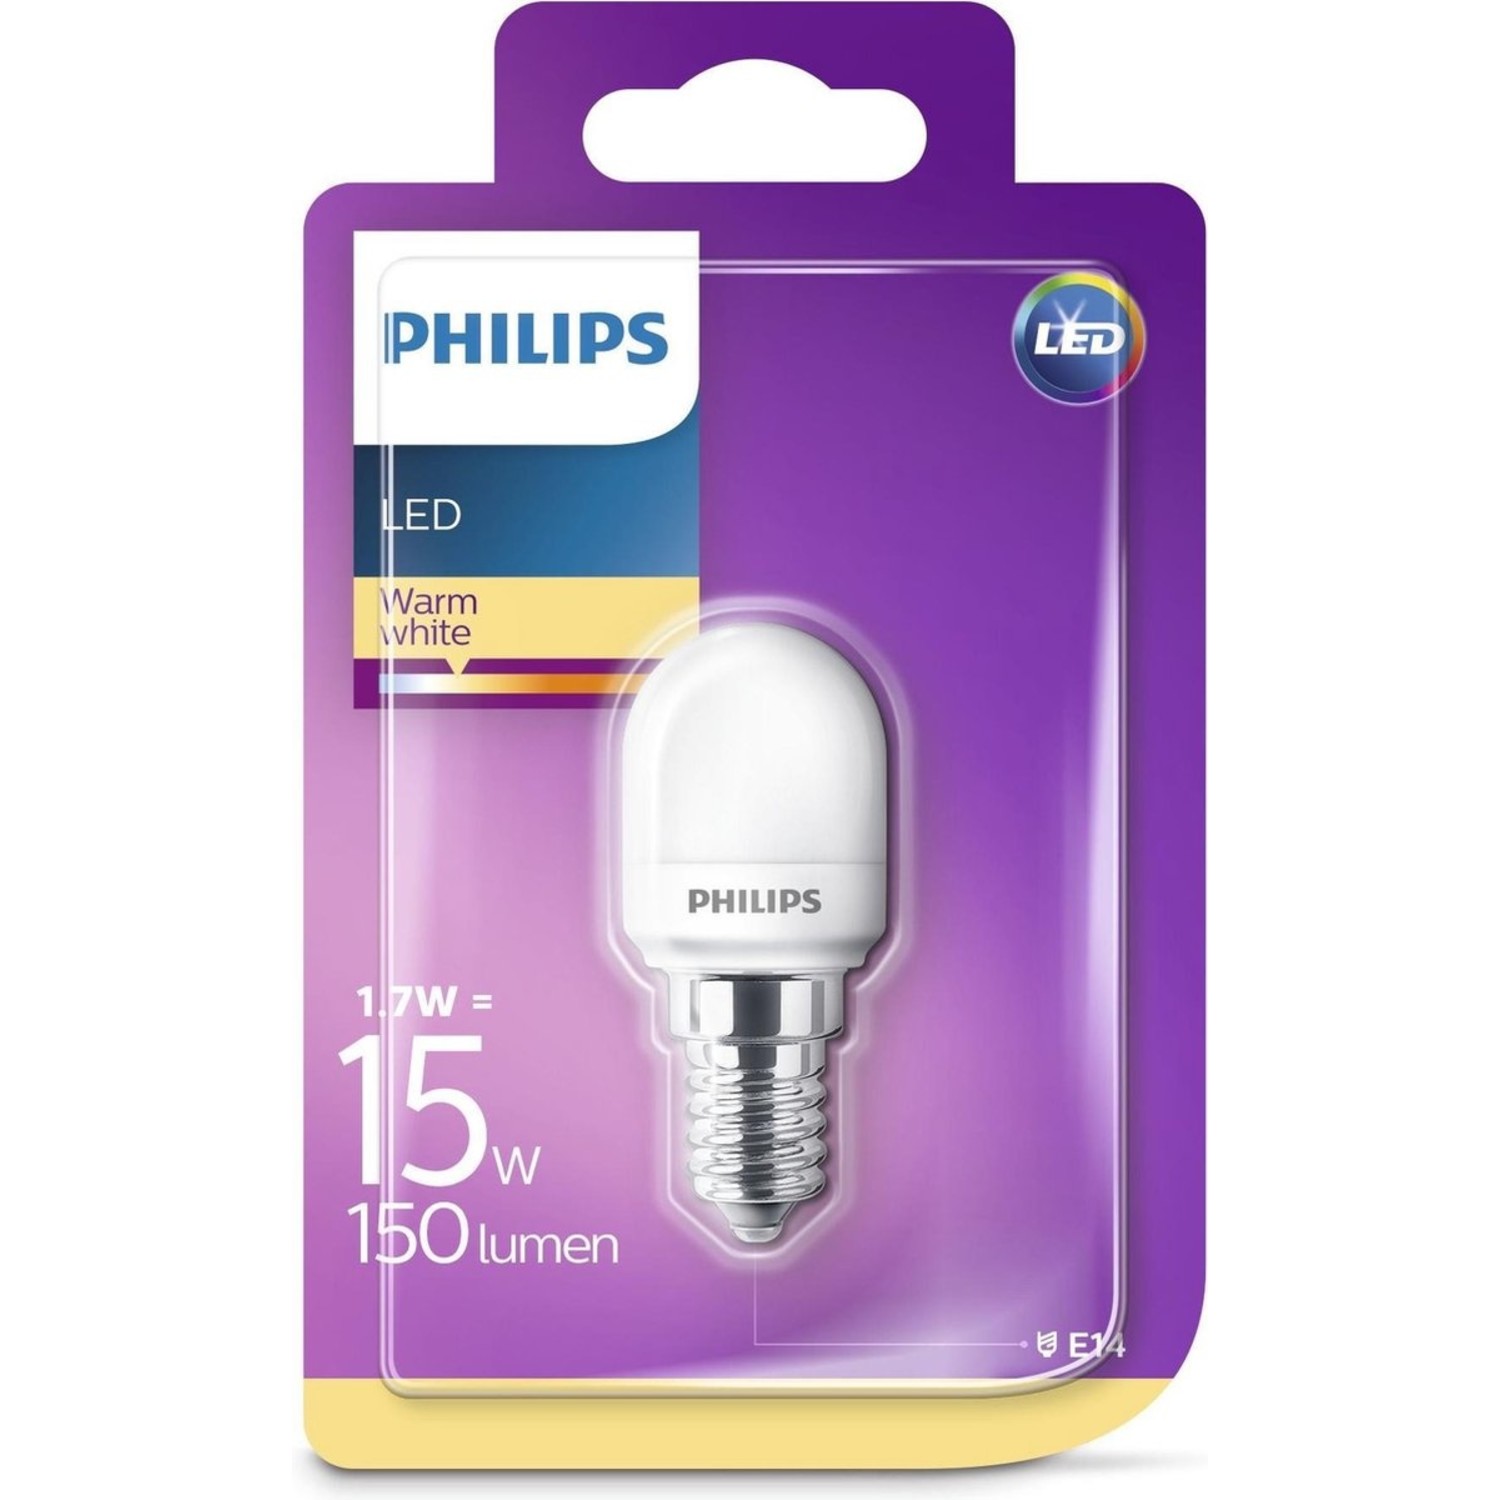 Initiatief fout Misleidend Philips Koelkastlamp LED E14 - 1.7W (15W) - Warm Wit Licht - Niet Dimbaar -  willemxl.com